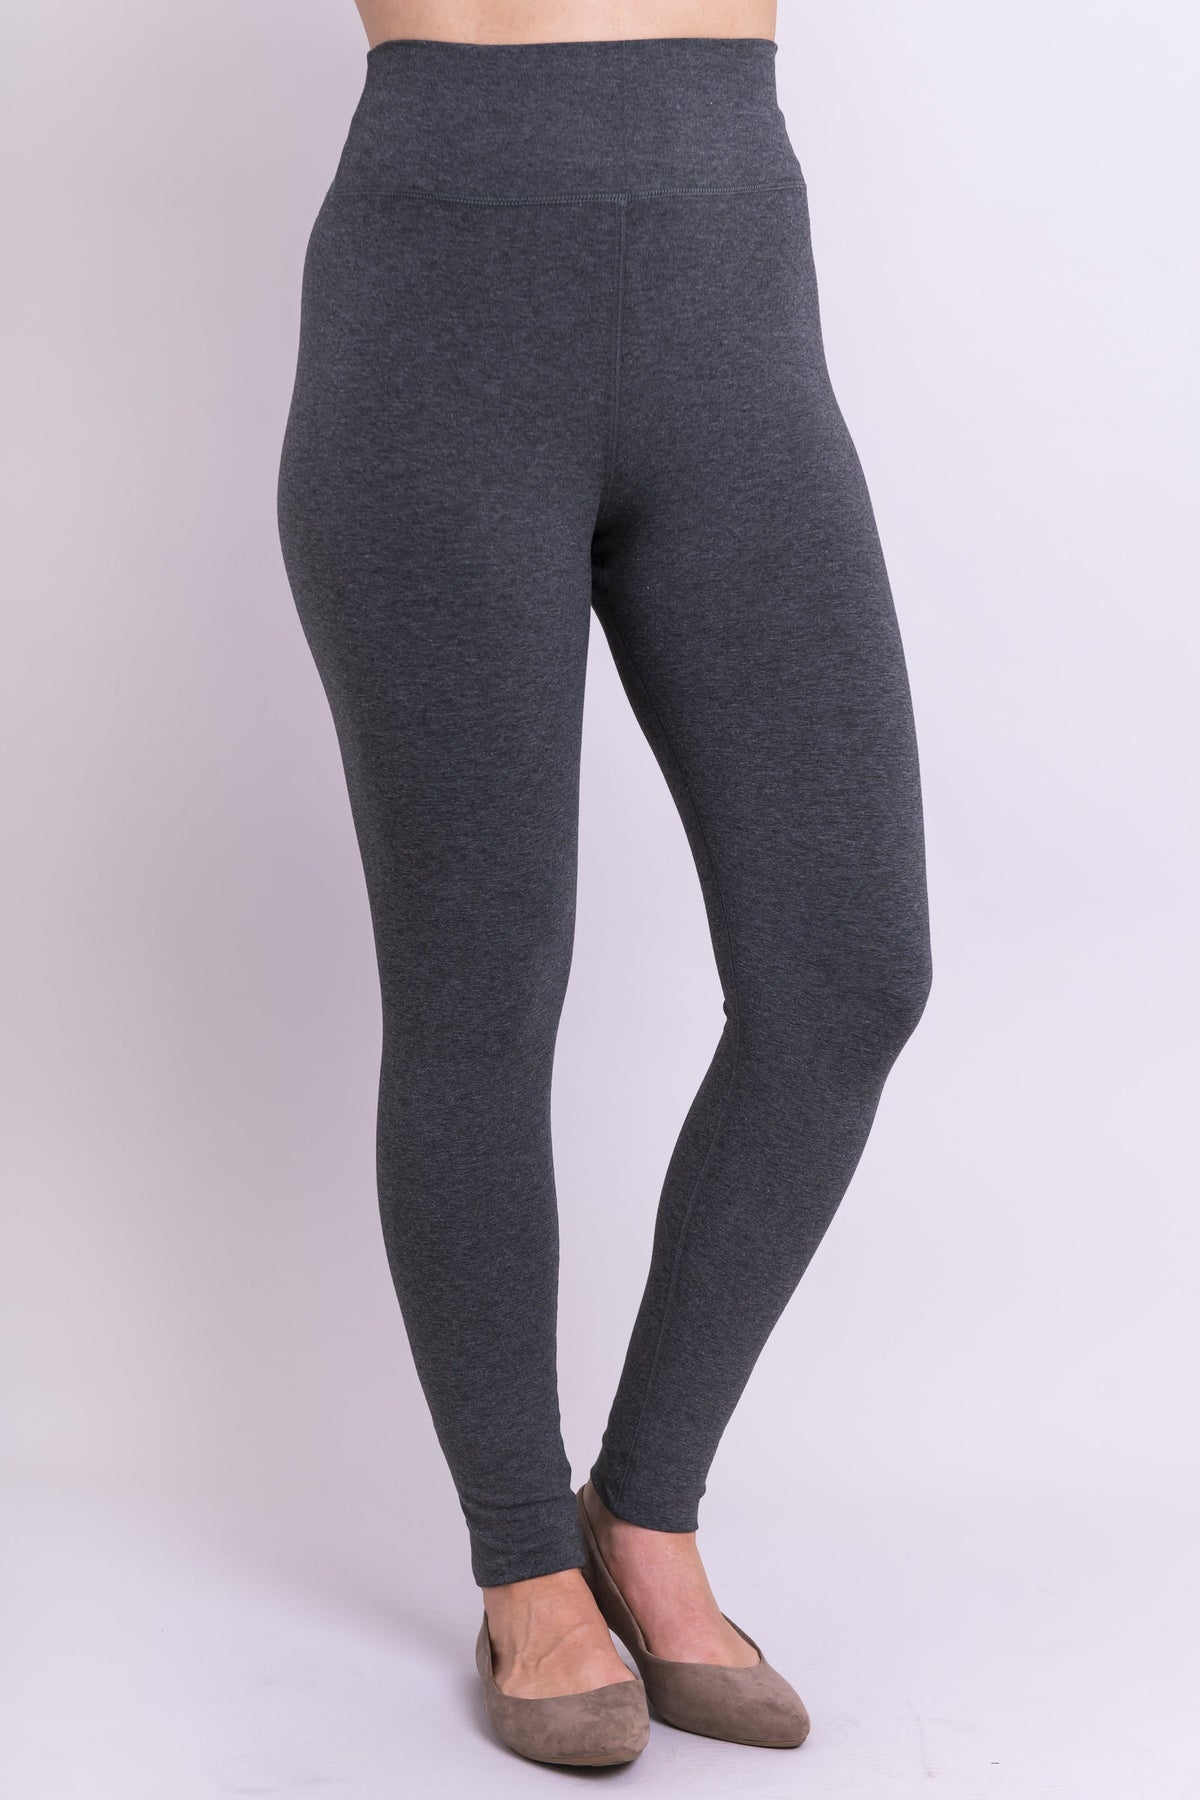 CALIA Women's PowerMove 7/8 Legging, XS, Carbon Grey Gray - Yahoo